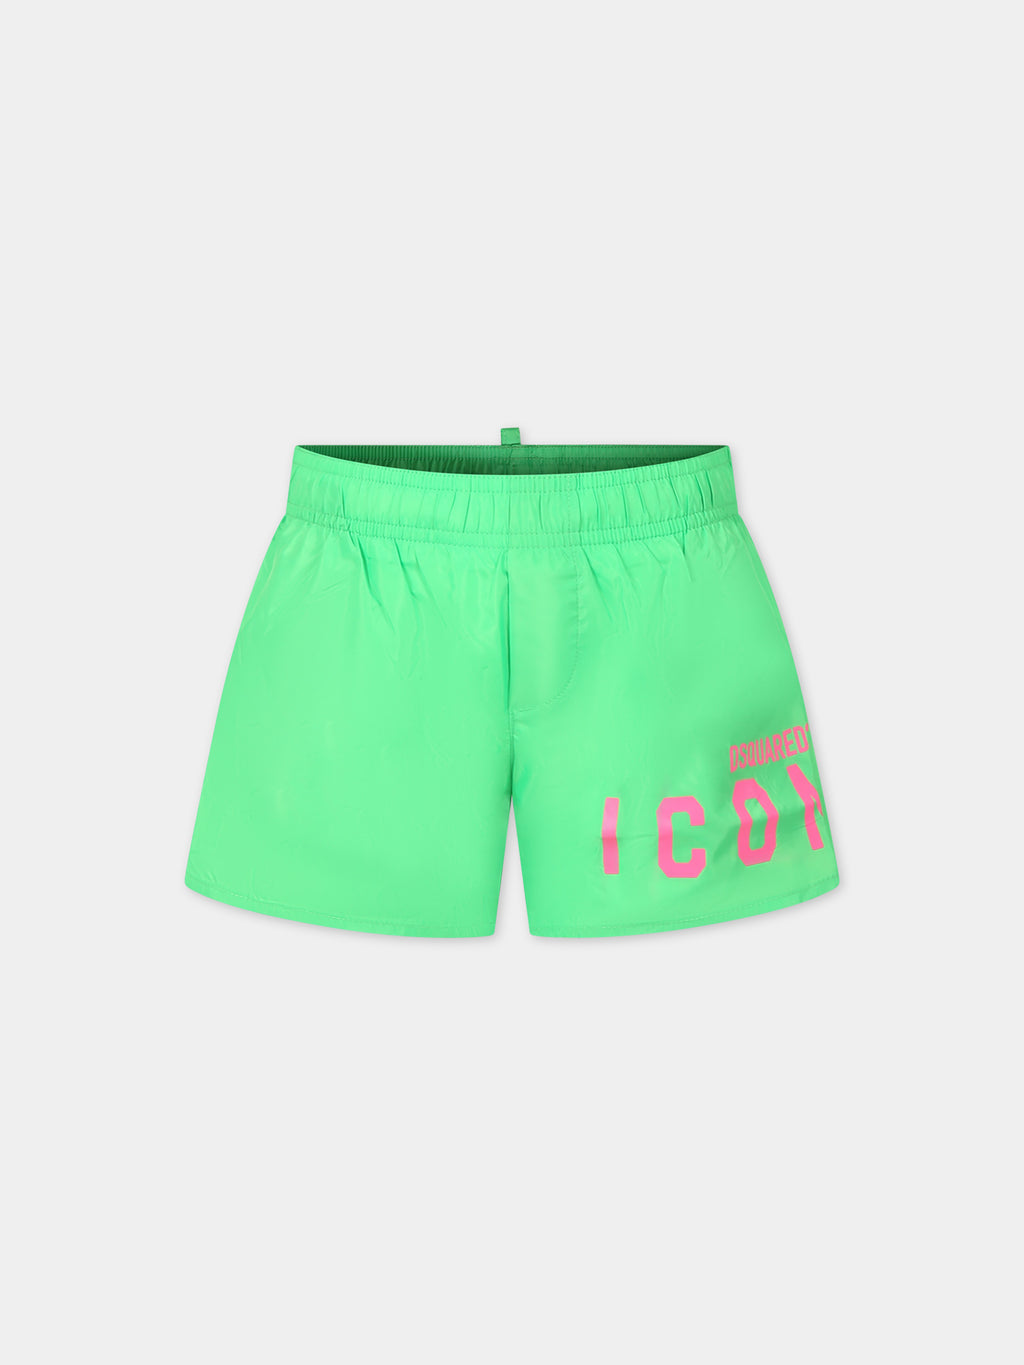 Green swim shorts for boy with logo